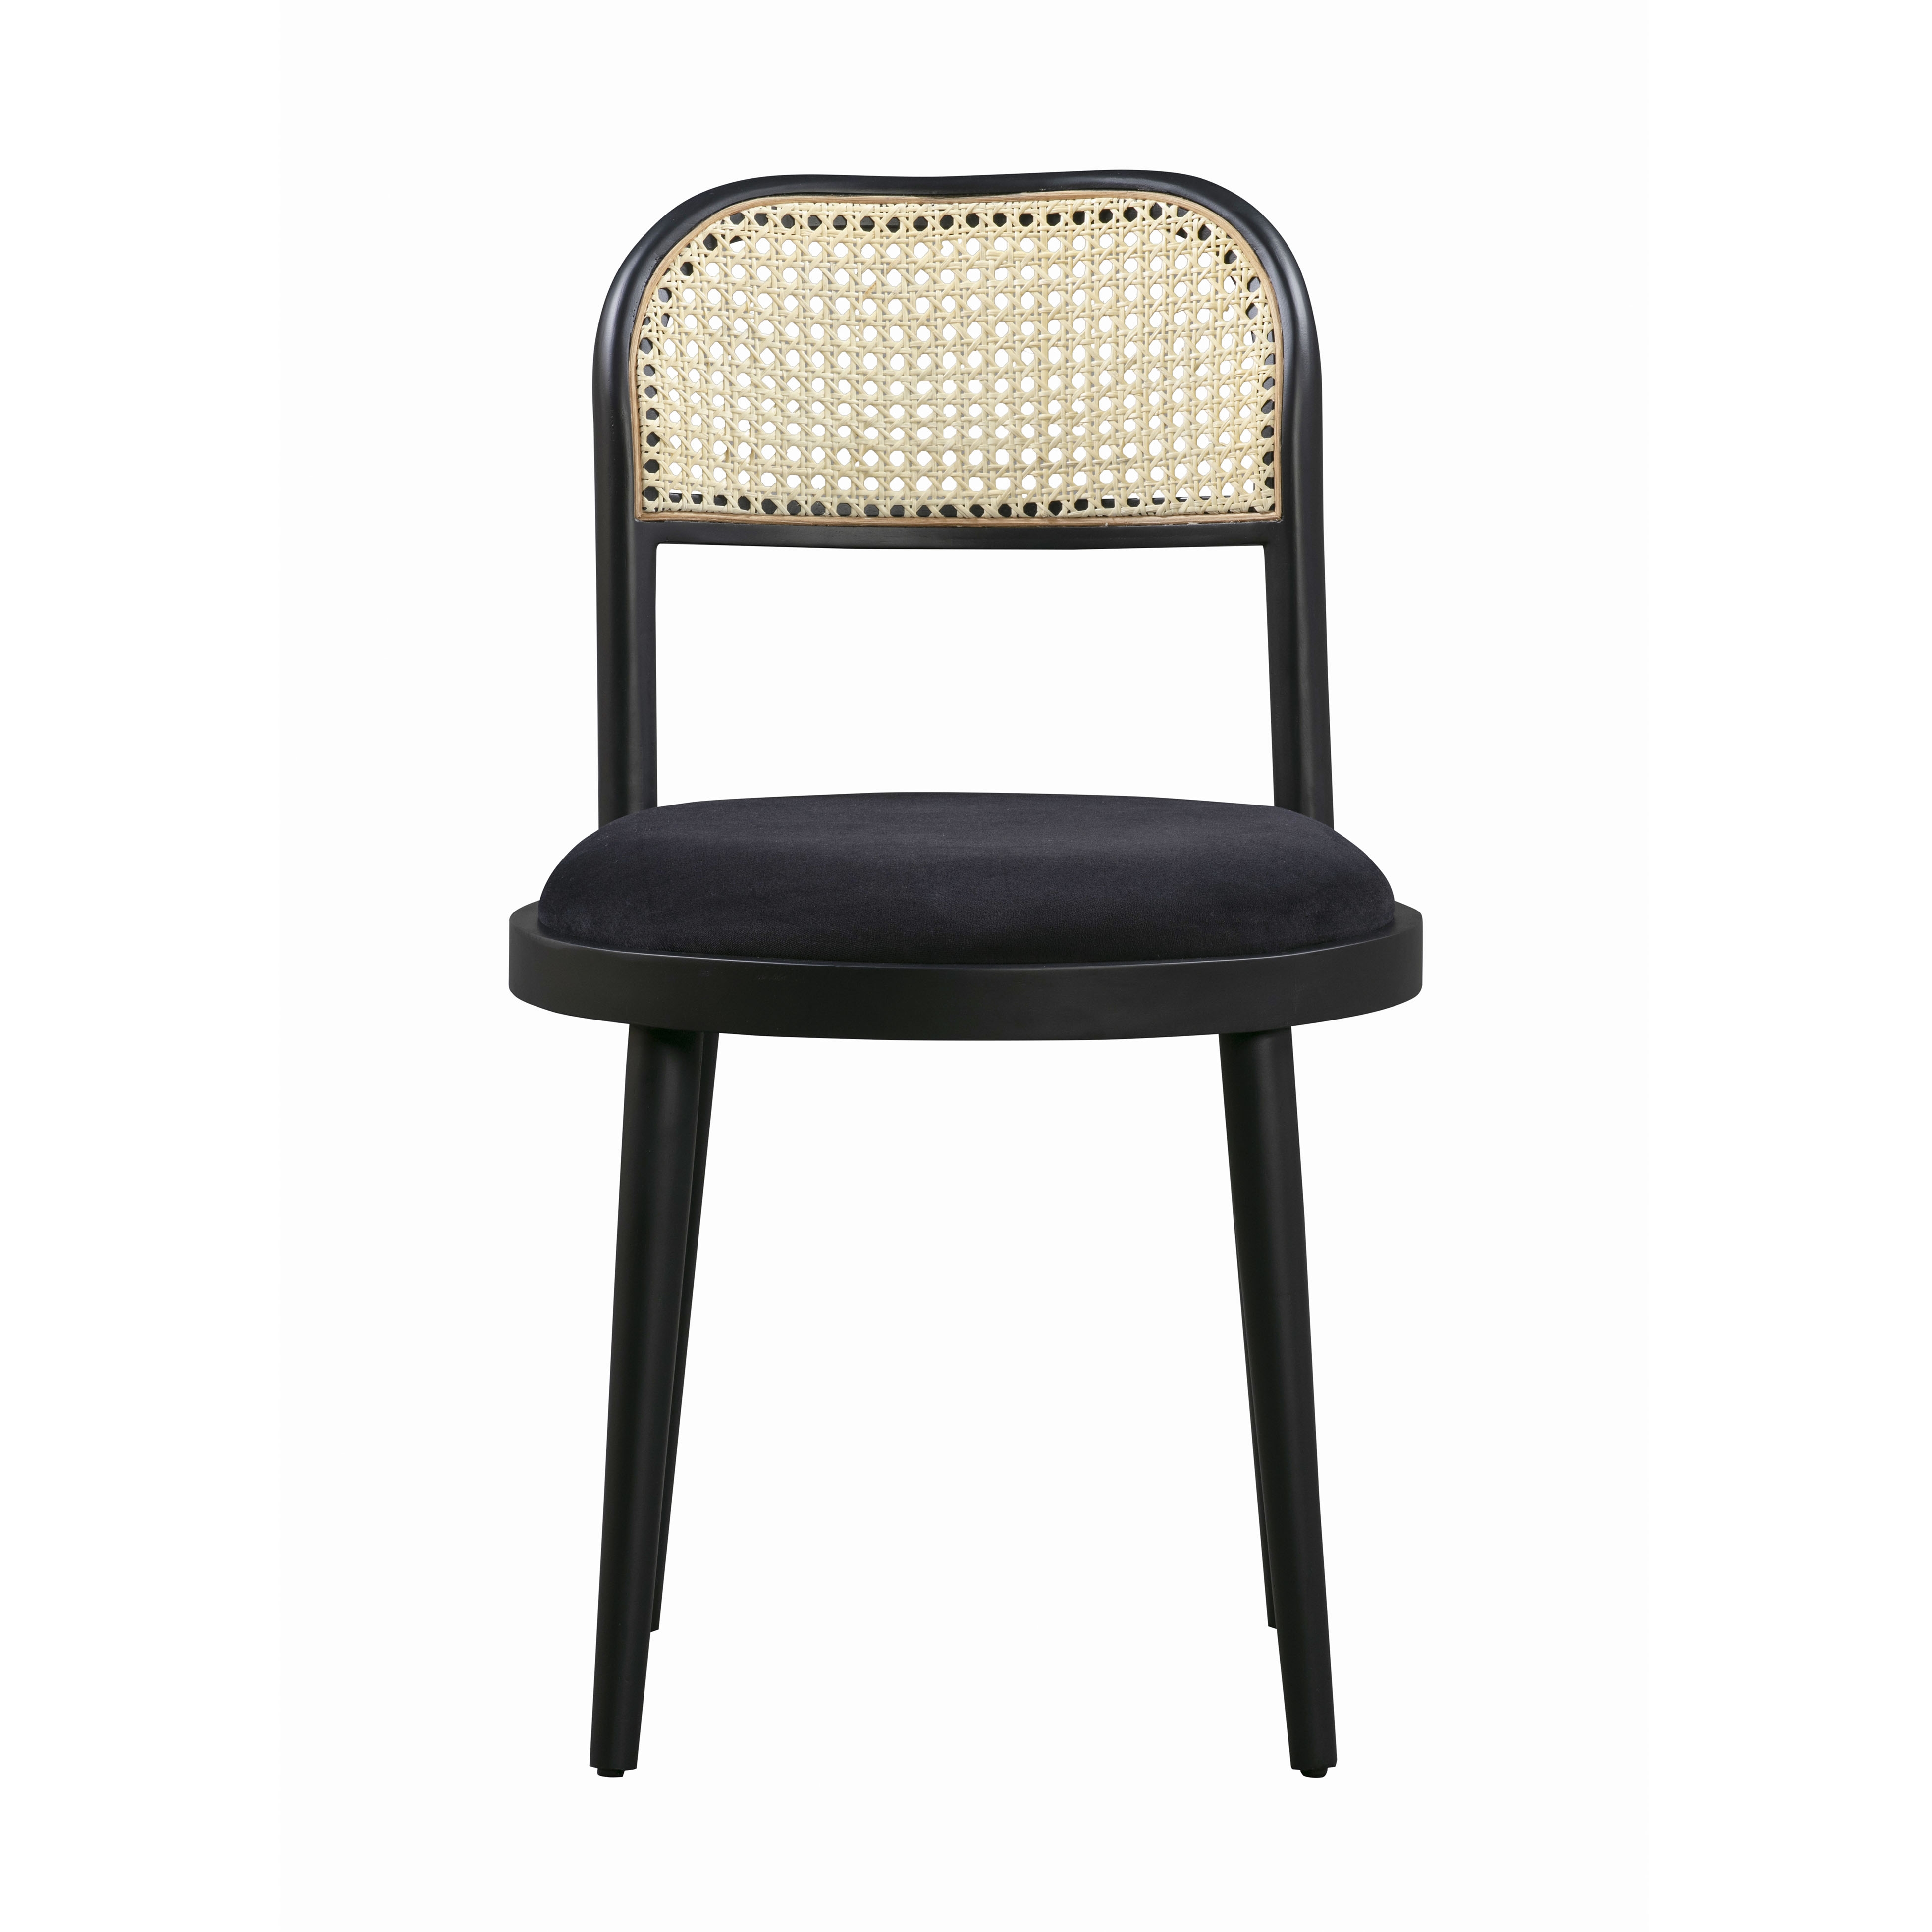 Brava Cane Dining Chair - Image 2